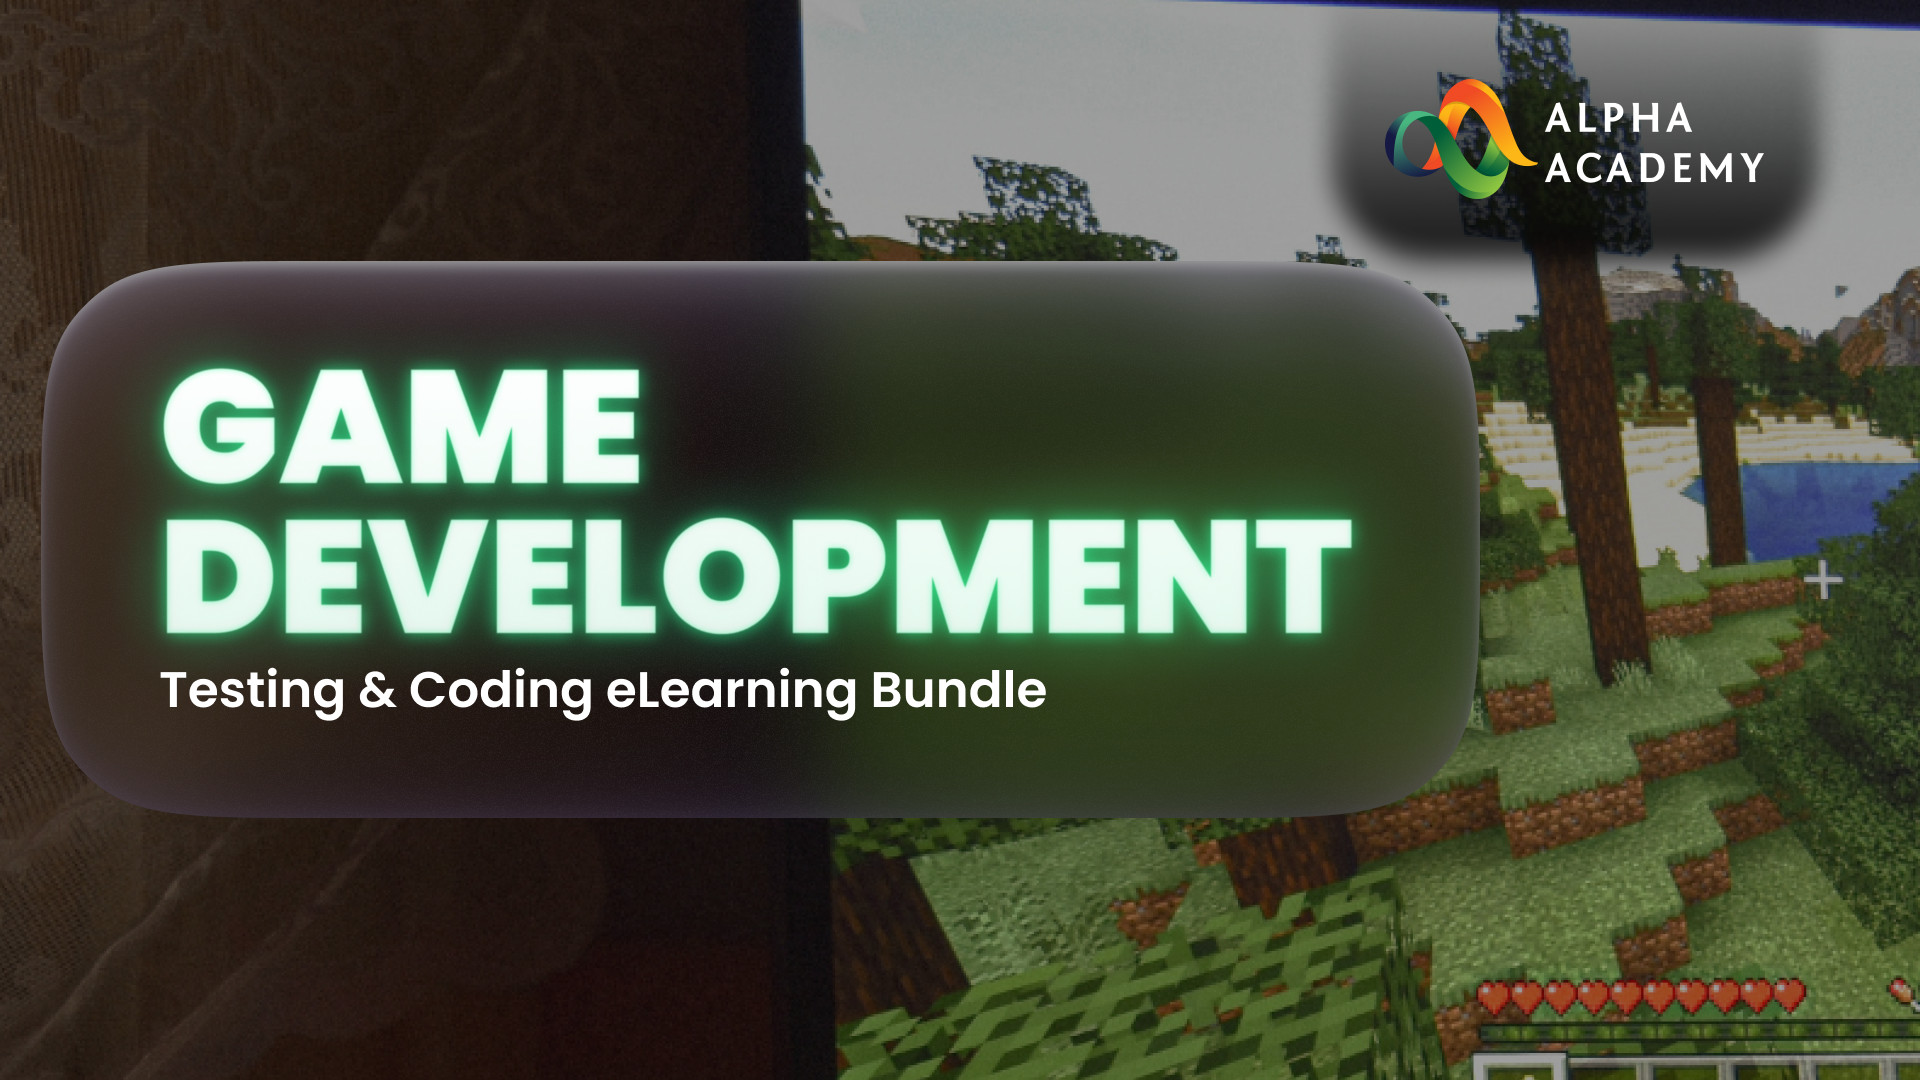 Game Development, Testing & Coding eLearning Bundle Alpha Academy Code 10.19 $